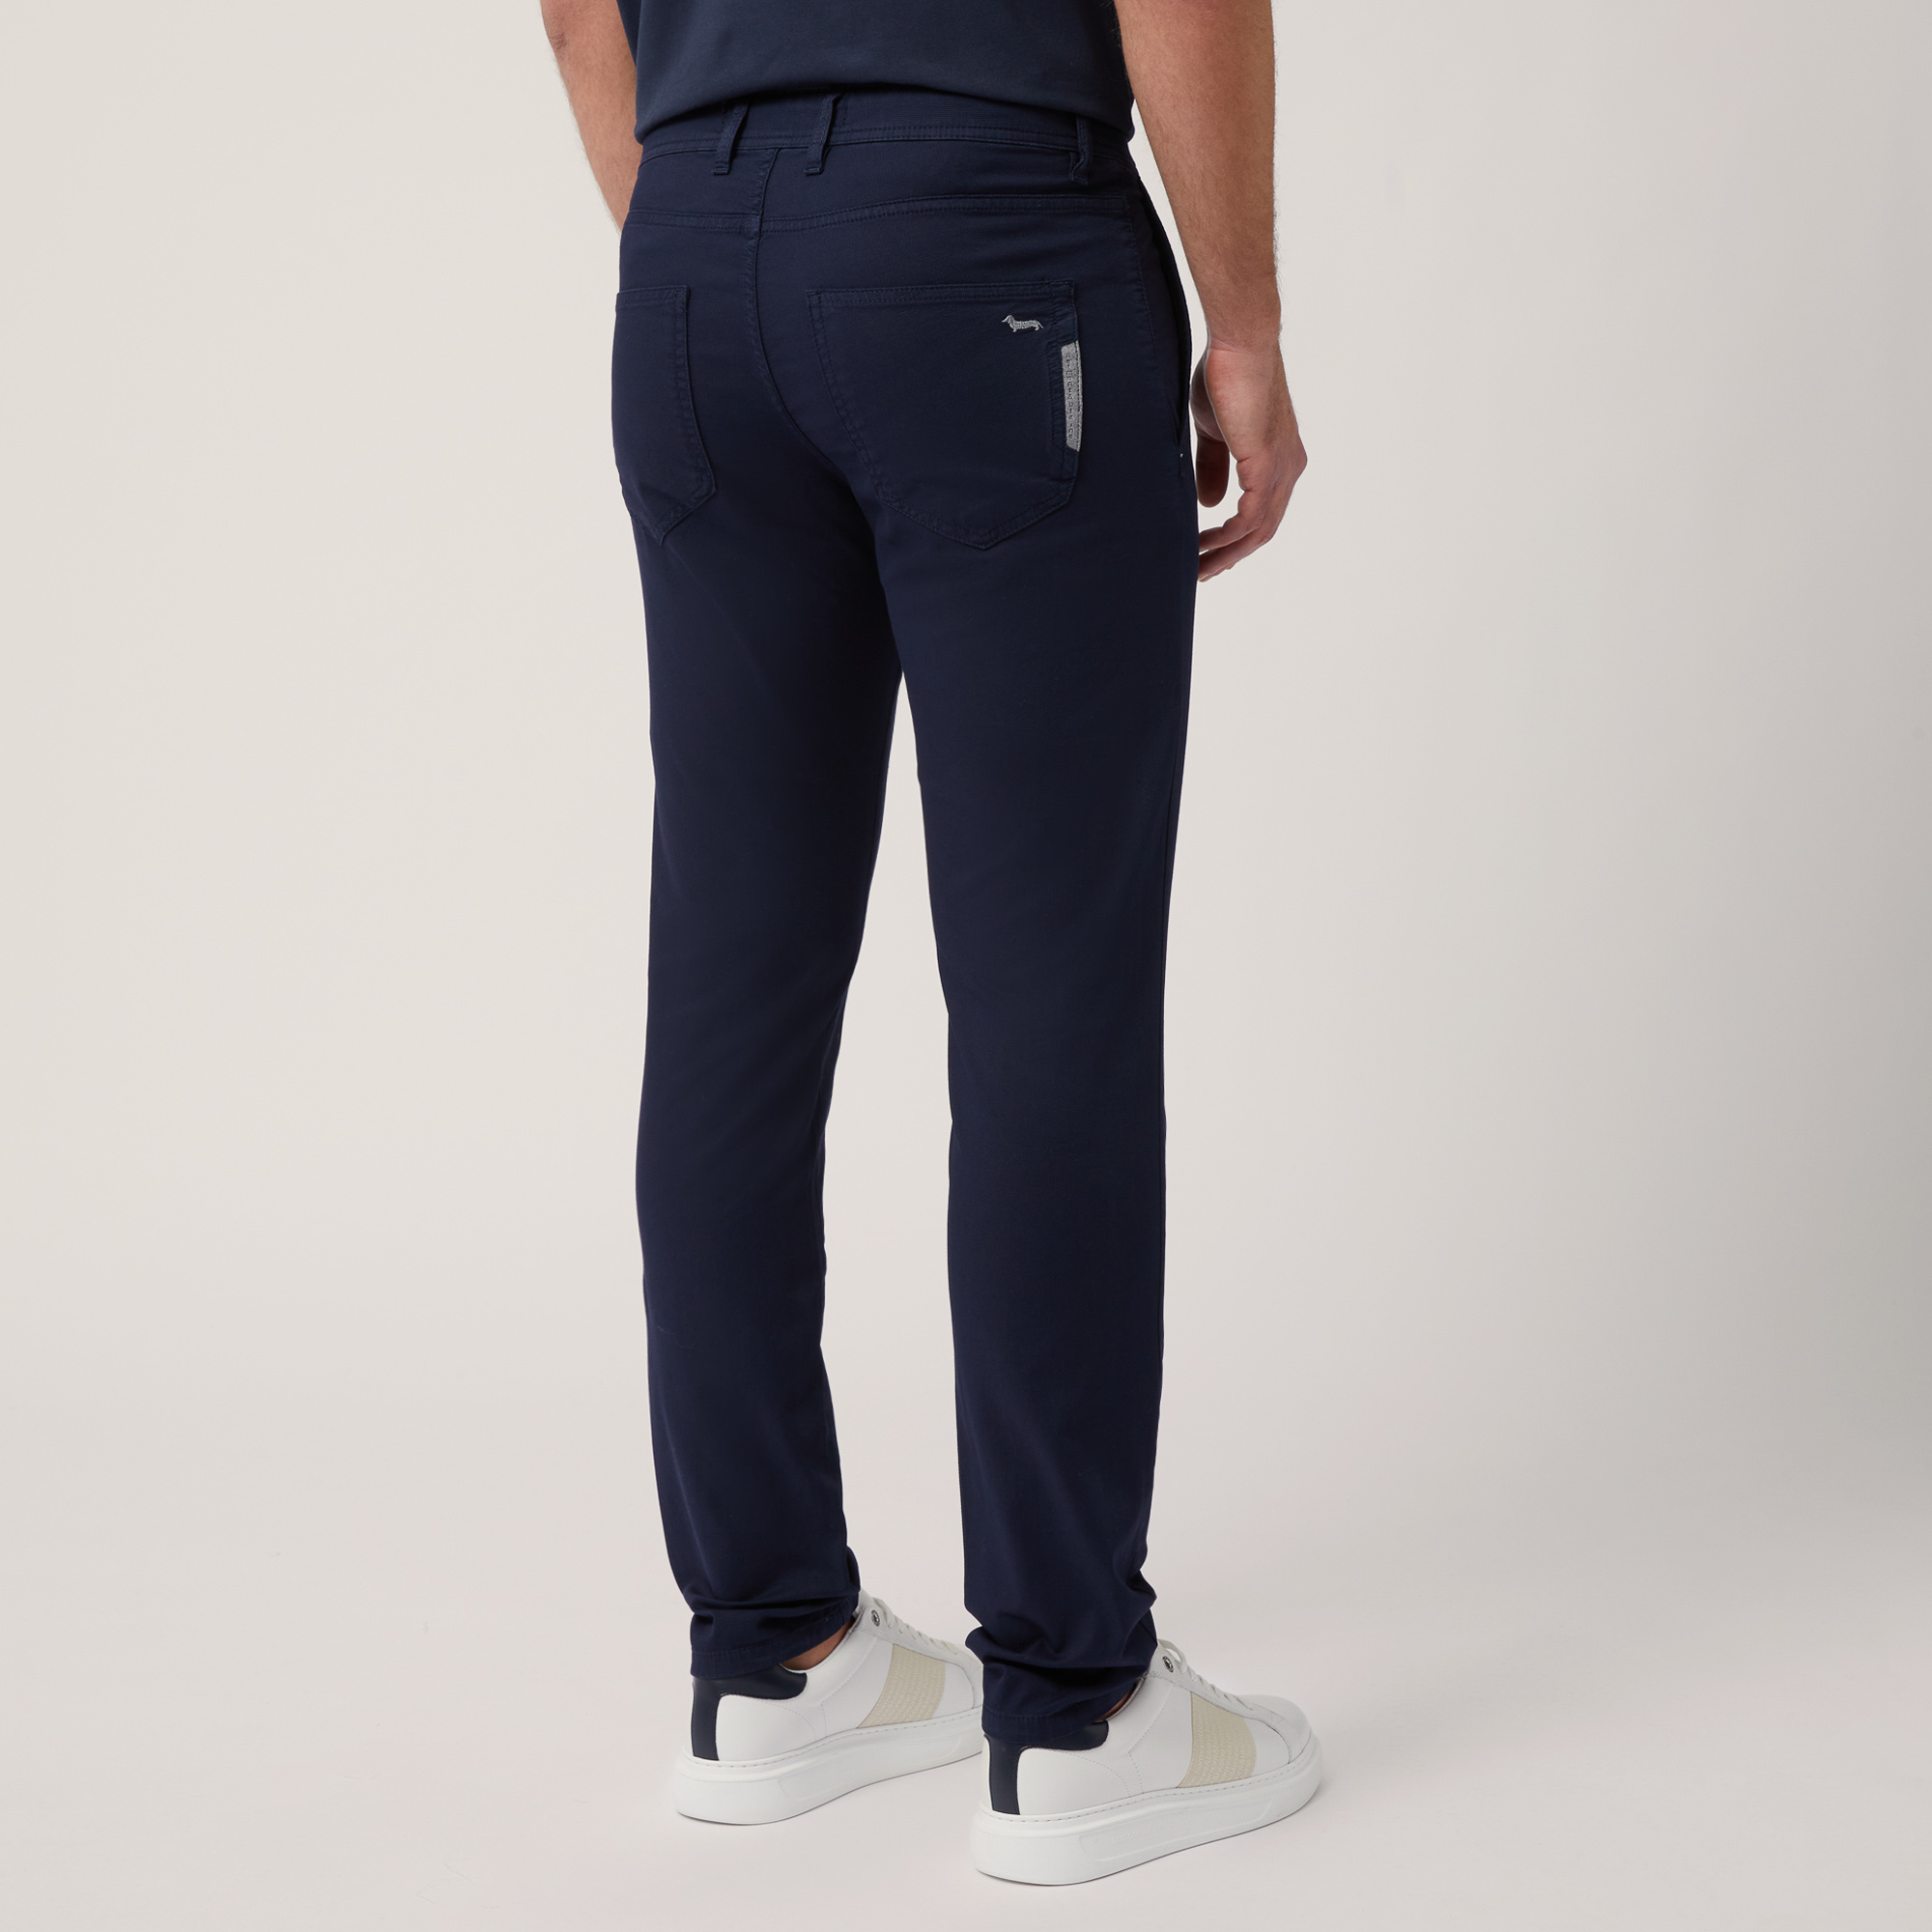 Pantaloni Colorfive, Blu Navy, large image number 1